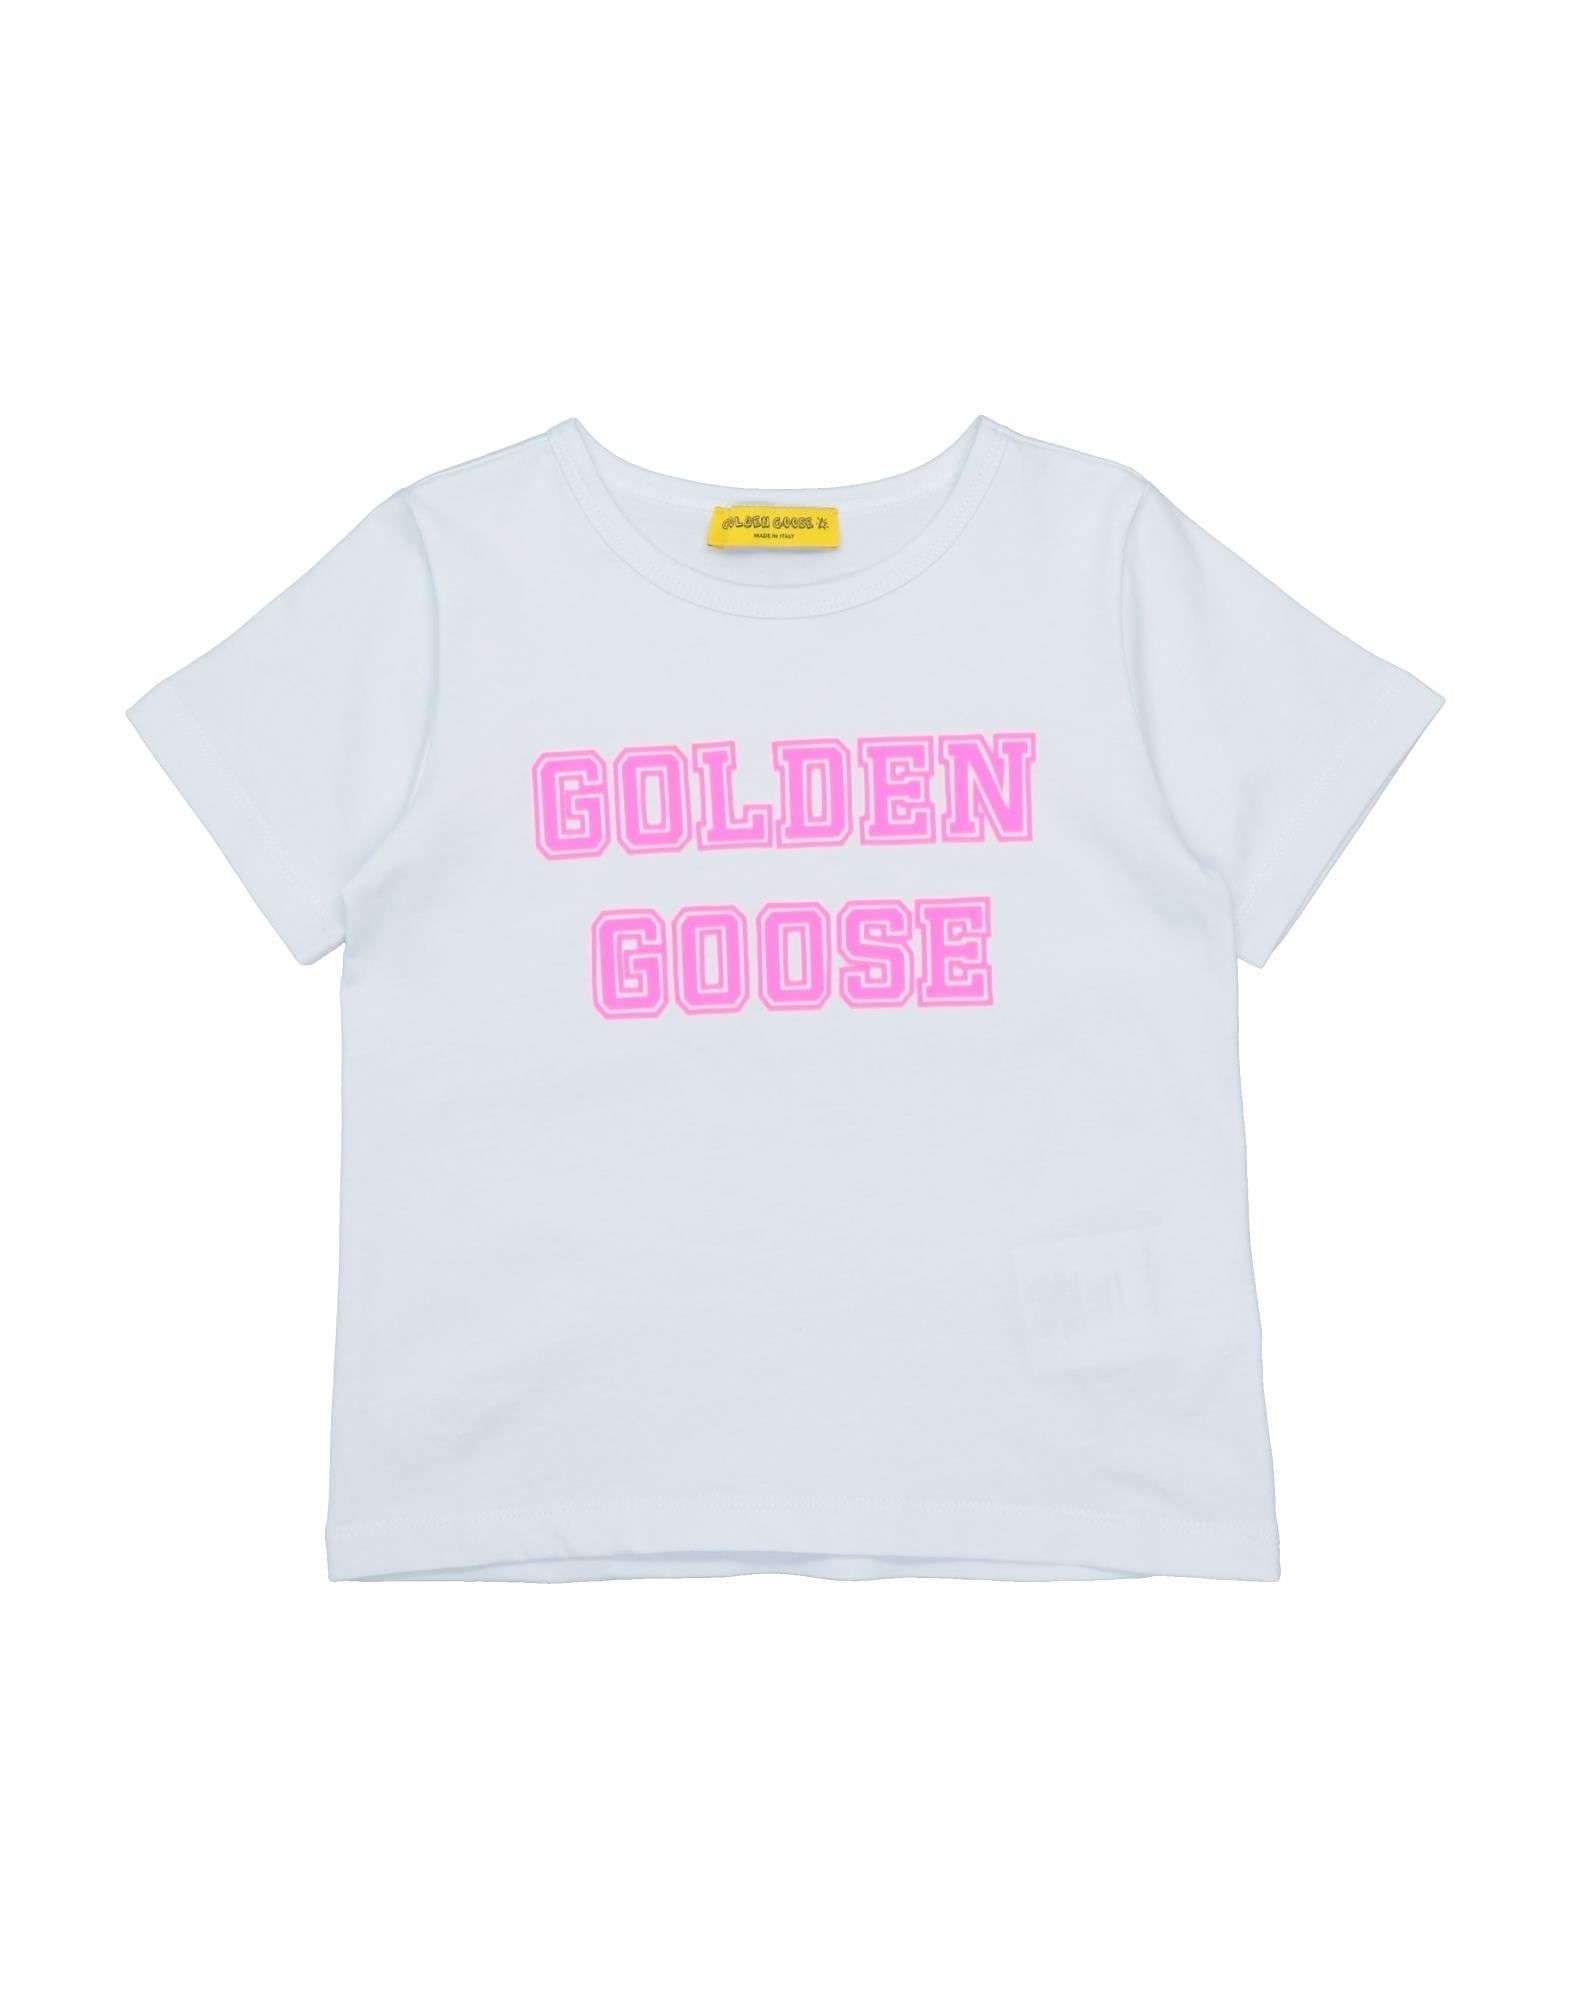 GOLDEN GOOSE GOLDEN GOOSE TODDLER T-SHIRT WHITE SIZE 4 COTTON,12467504IG 6